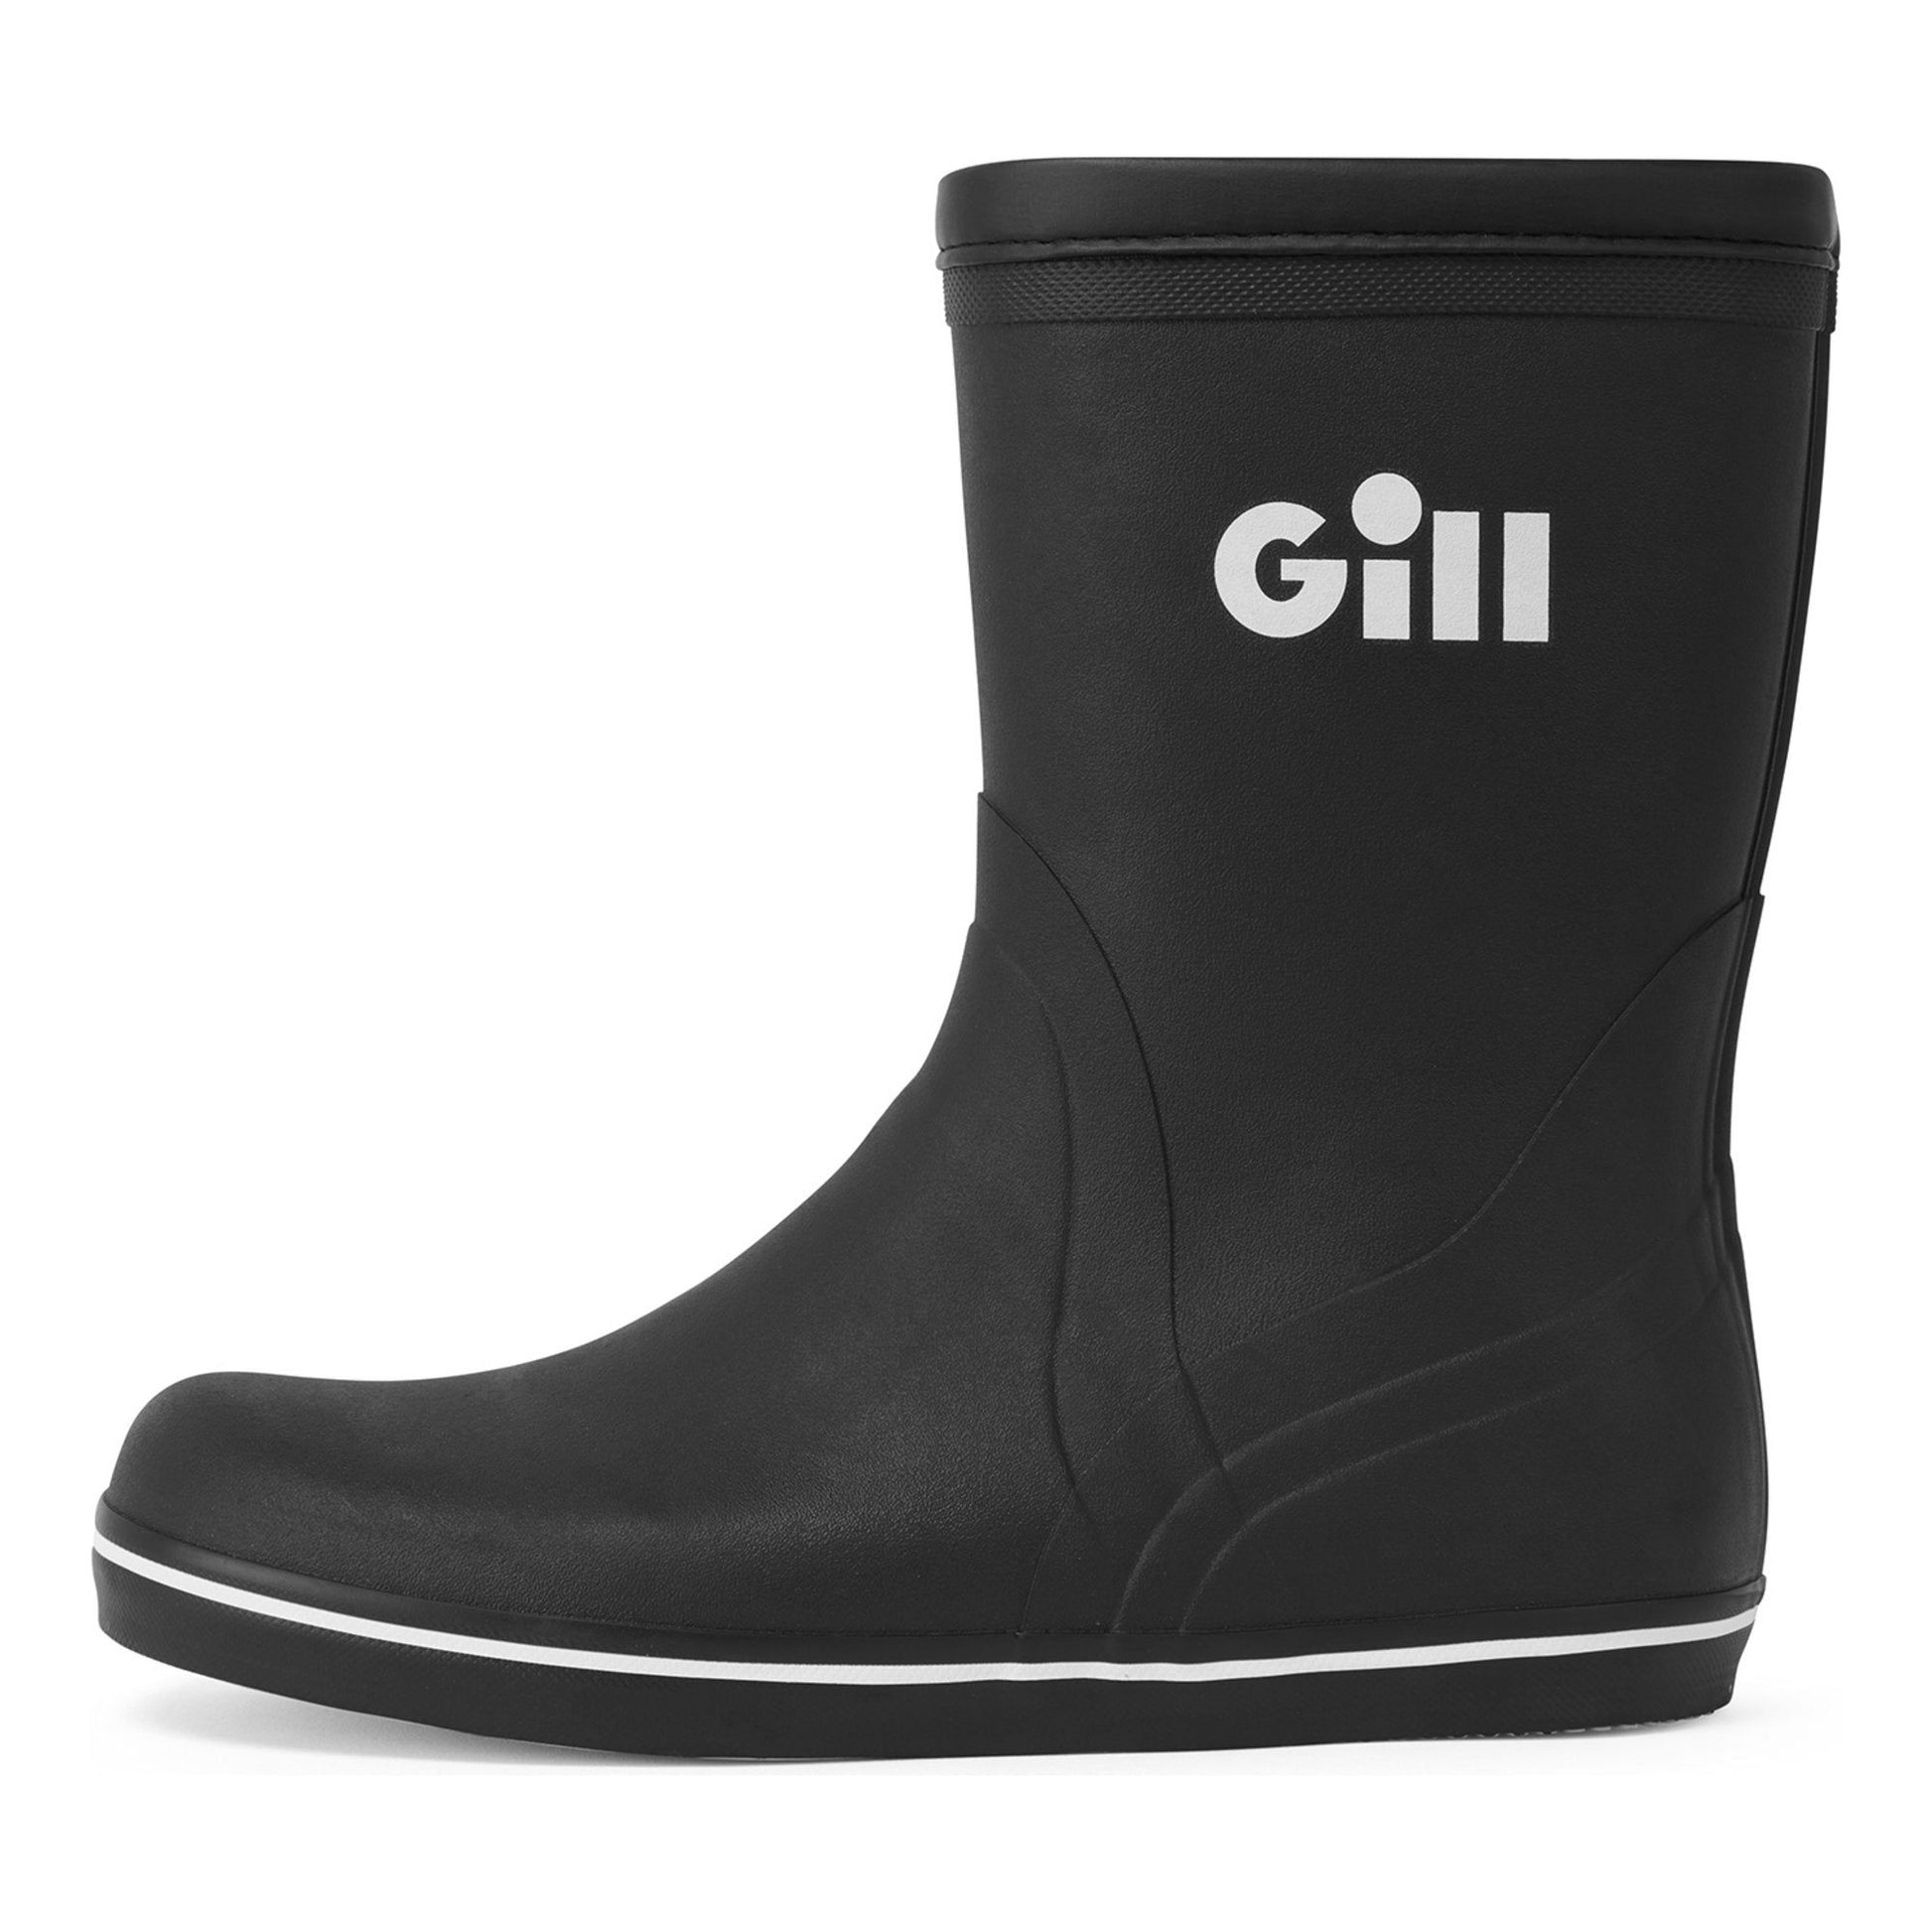 Gill Short Cruising Boots Black